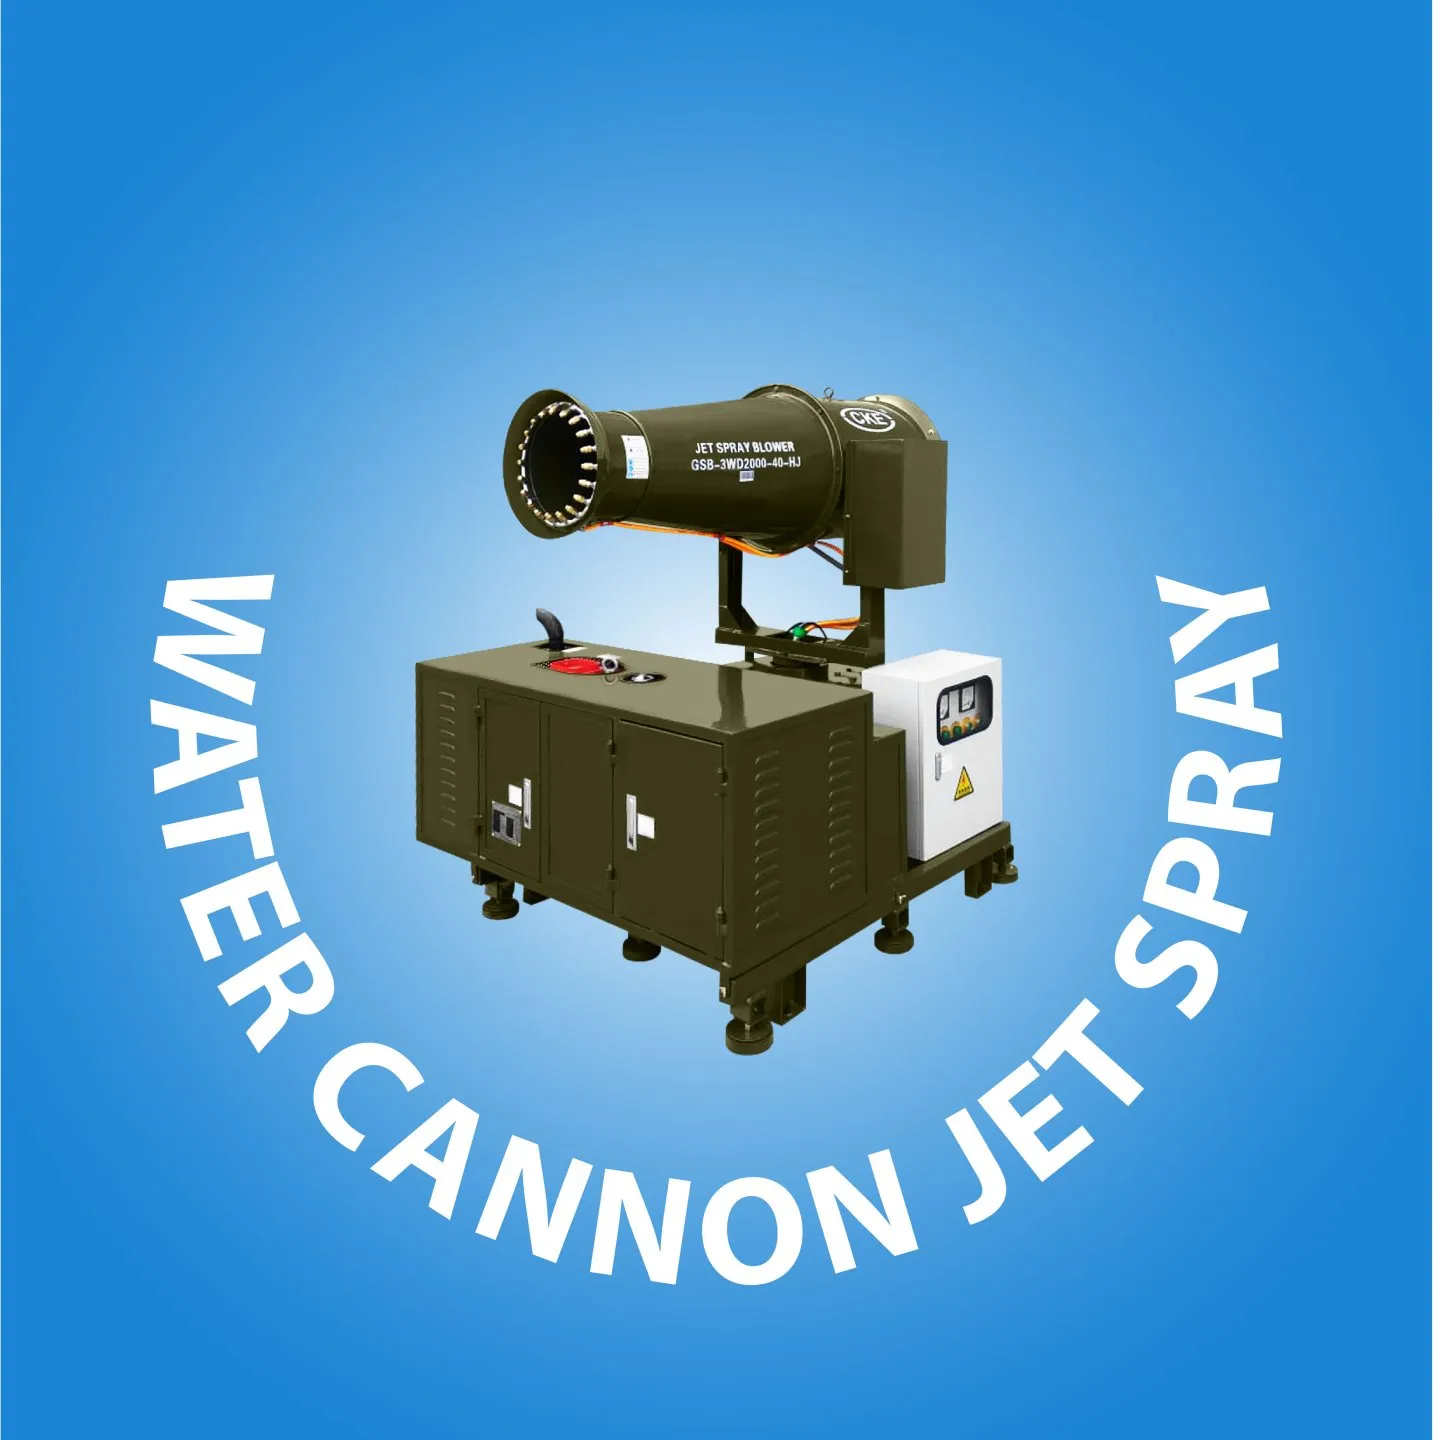  Water Cannon Jet Spray cover kategori website 39